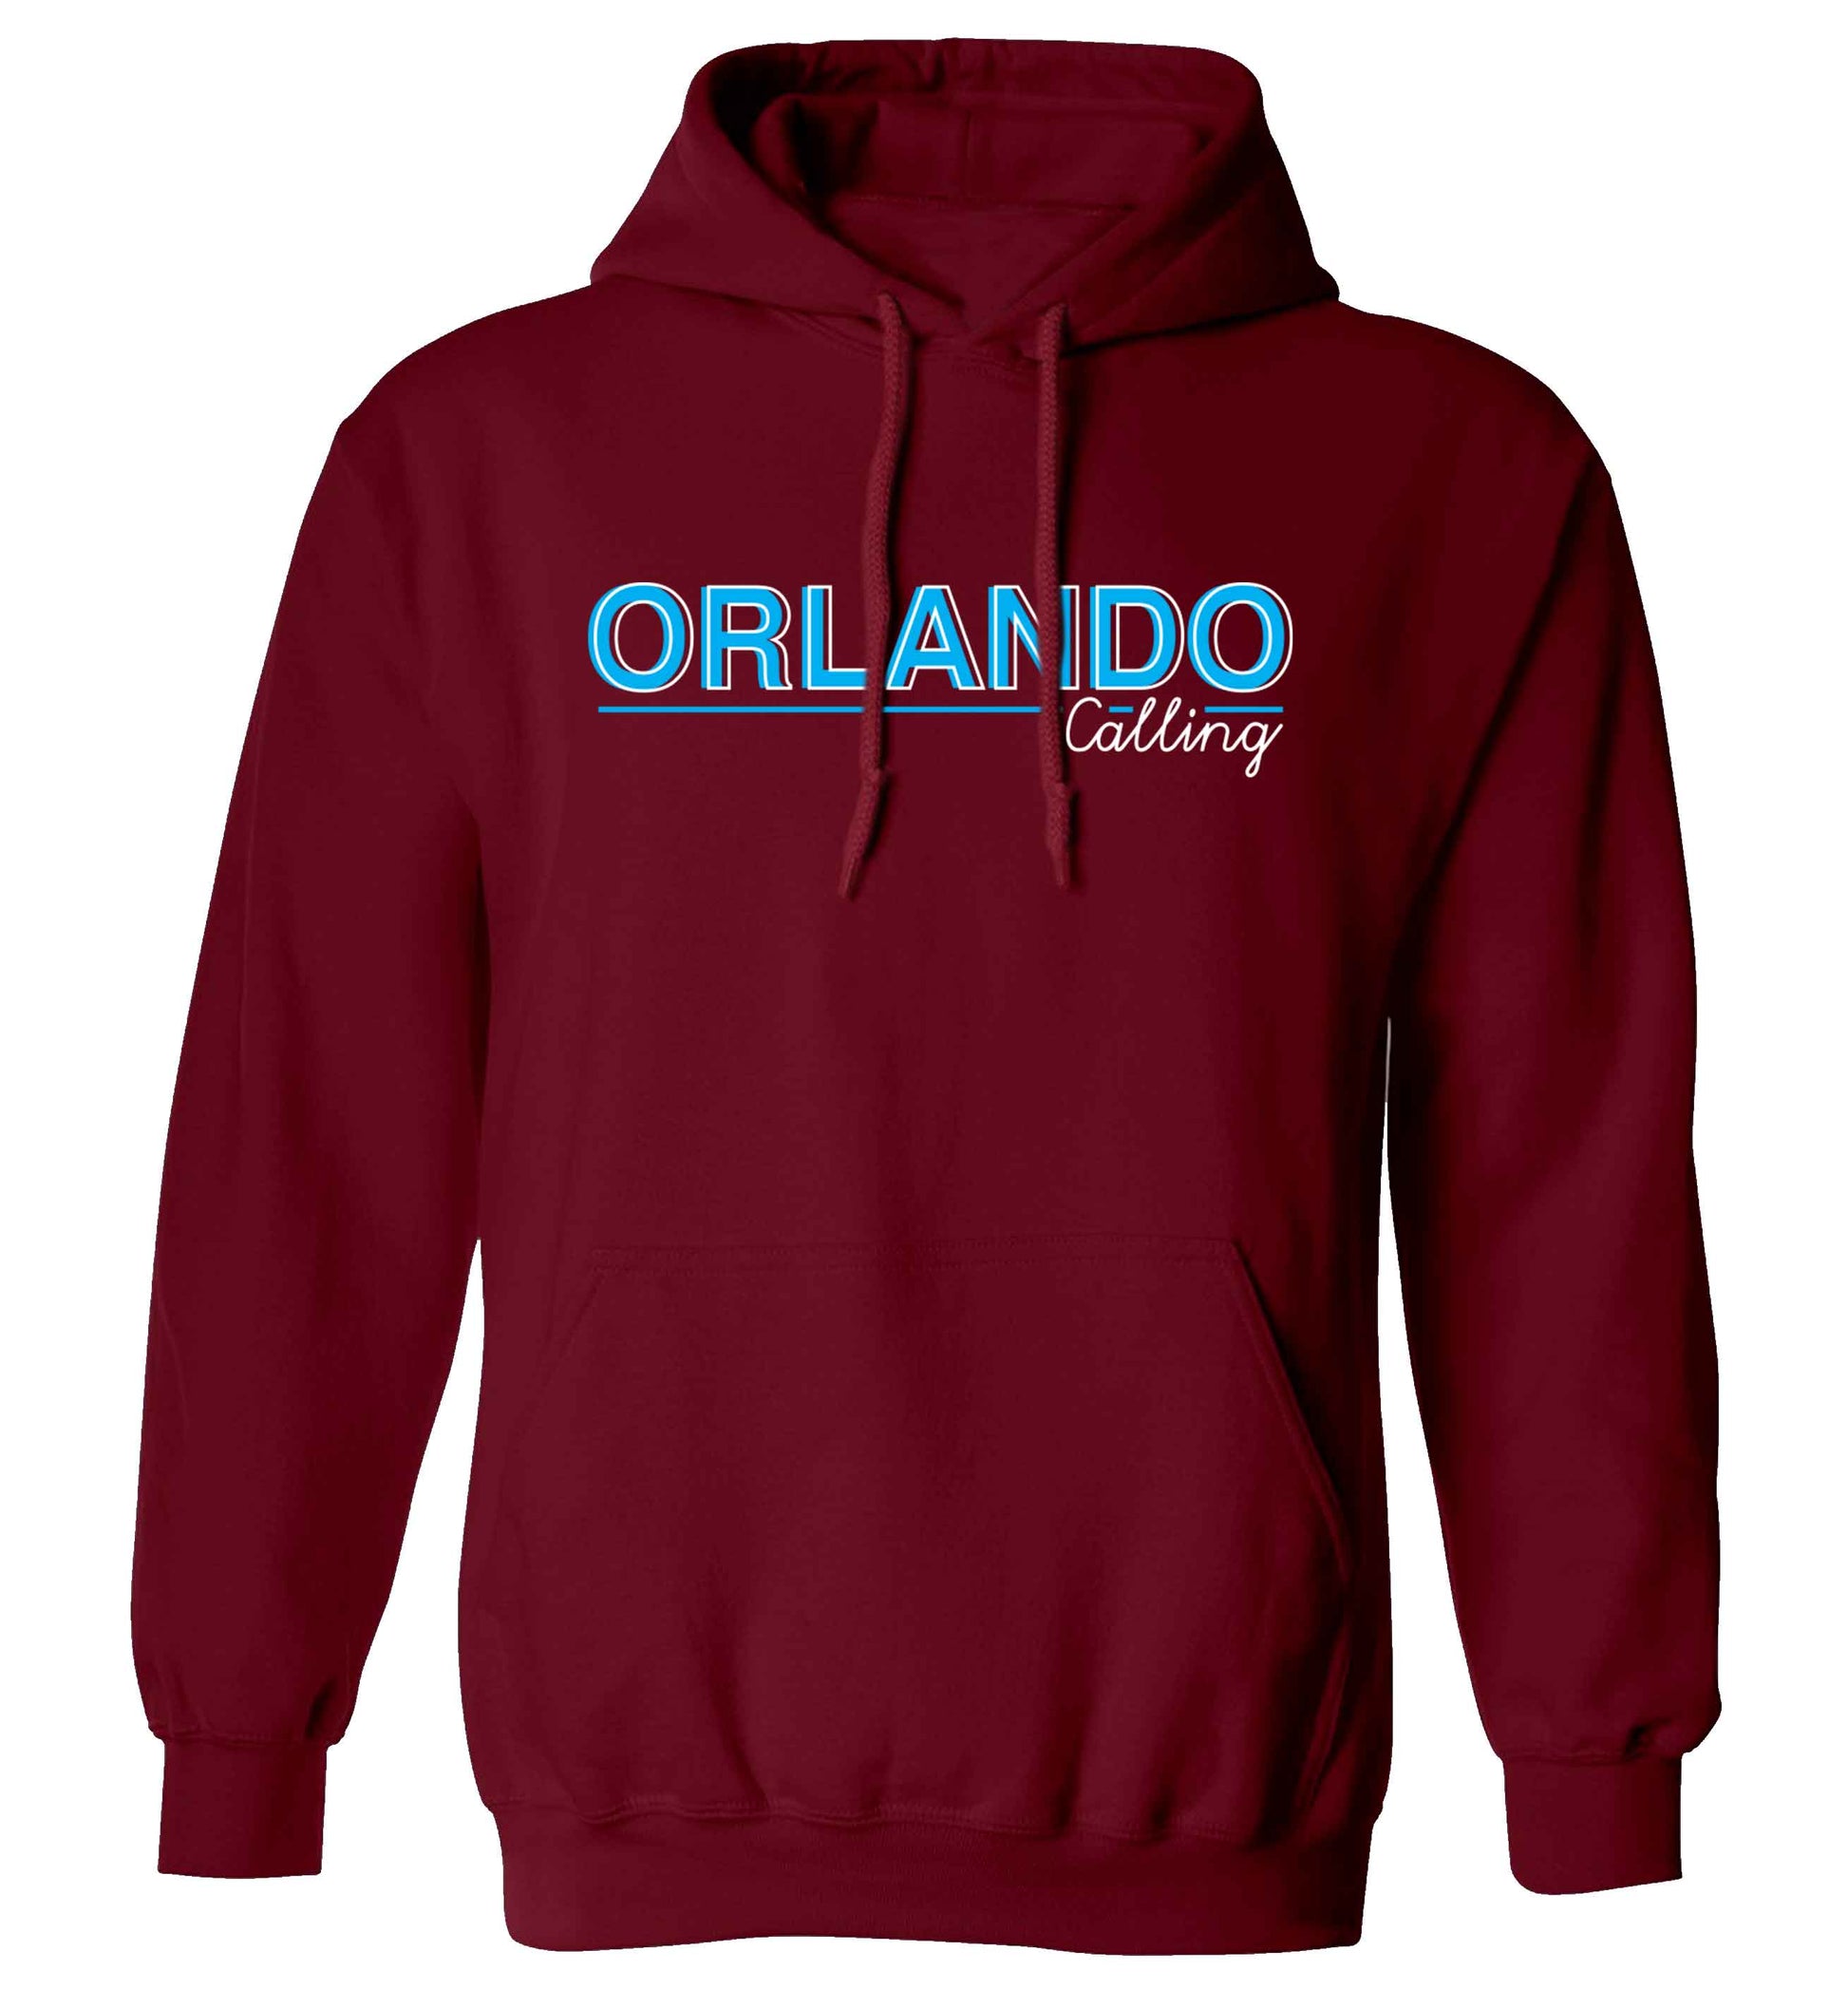 Orlando calling adults unisex maroon hoodie 2XL